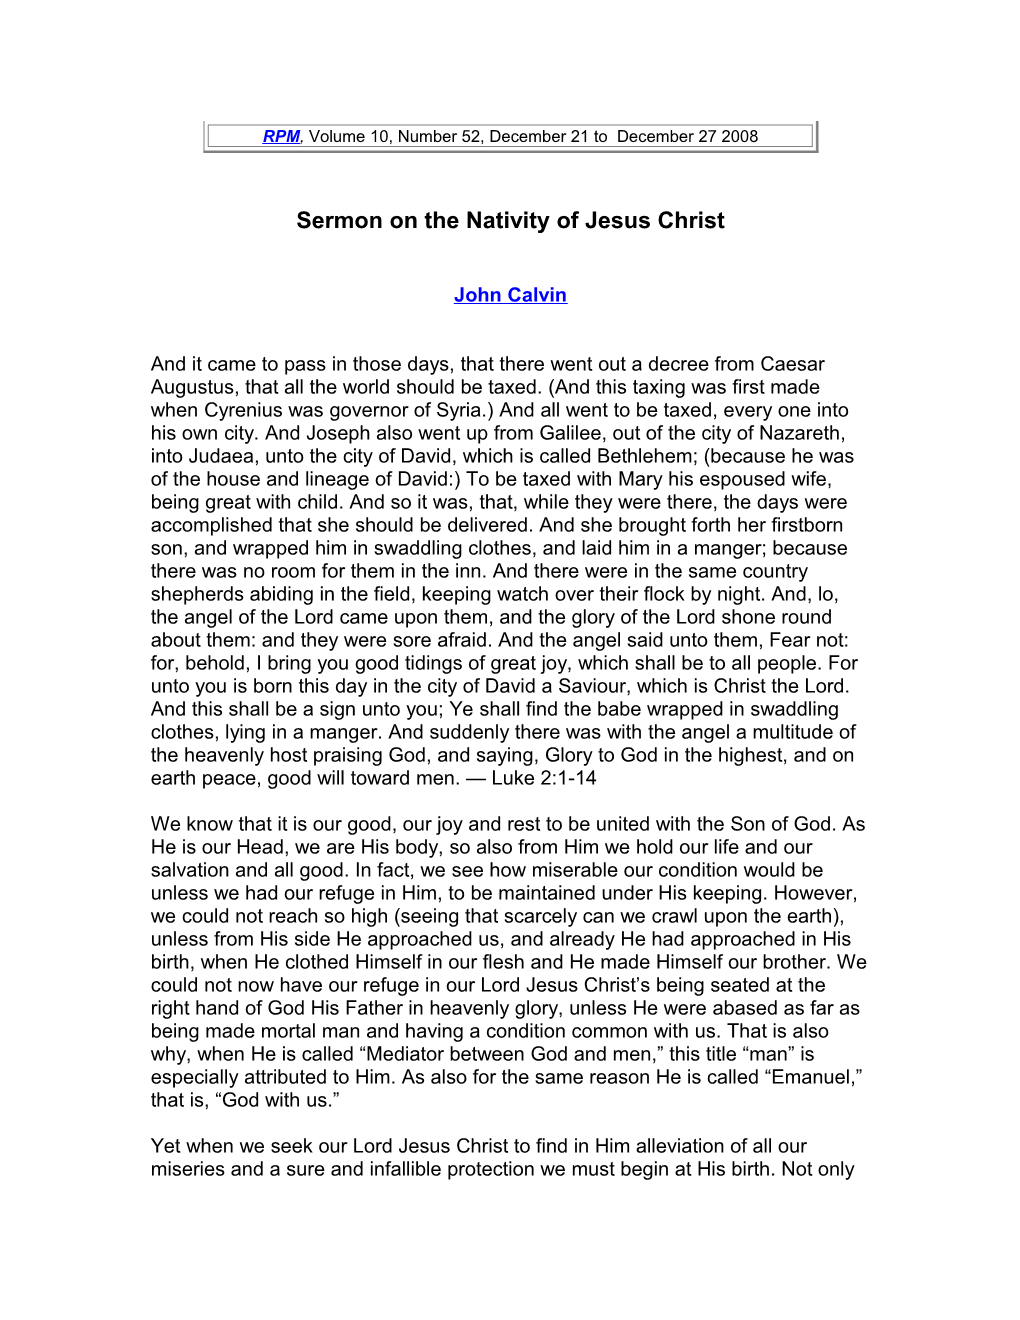 Sermon on the Nativity of Jesus Christ